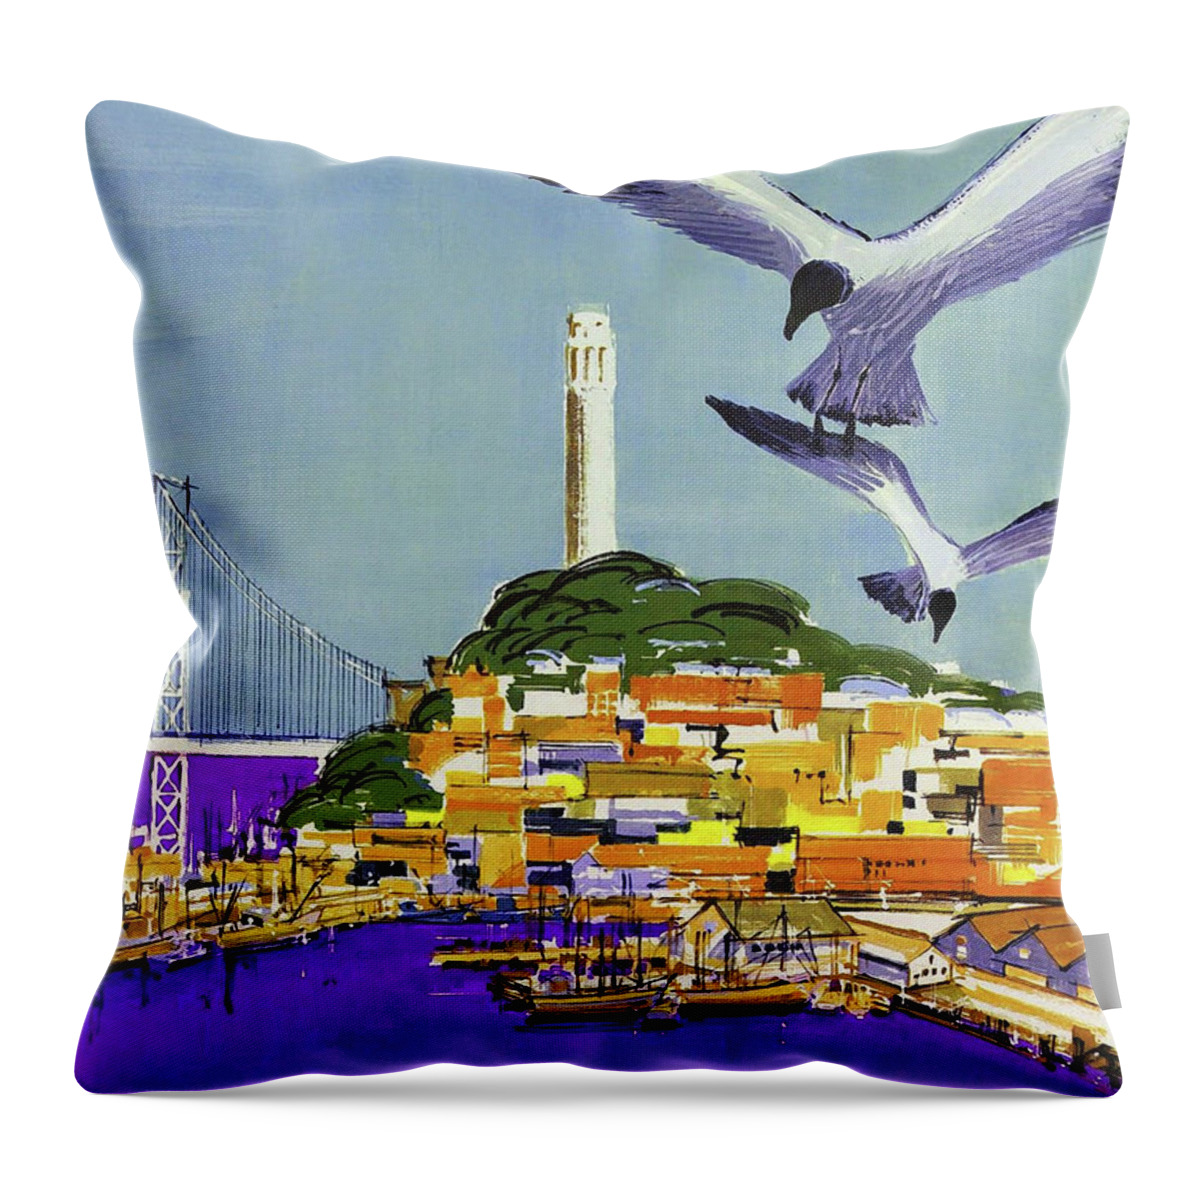 San Francisco Bay Throw Pillow featuring the painting San Francisco bay, Golden Gate bridge, travel poster by Long Shot